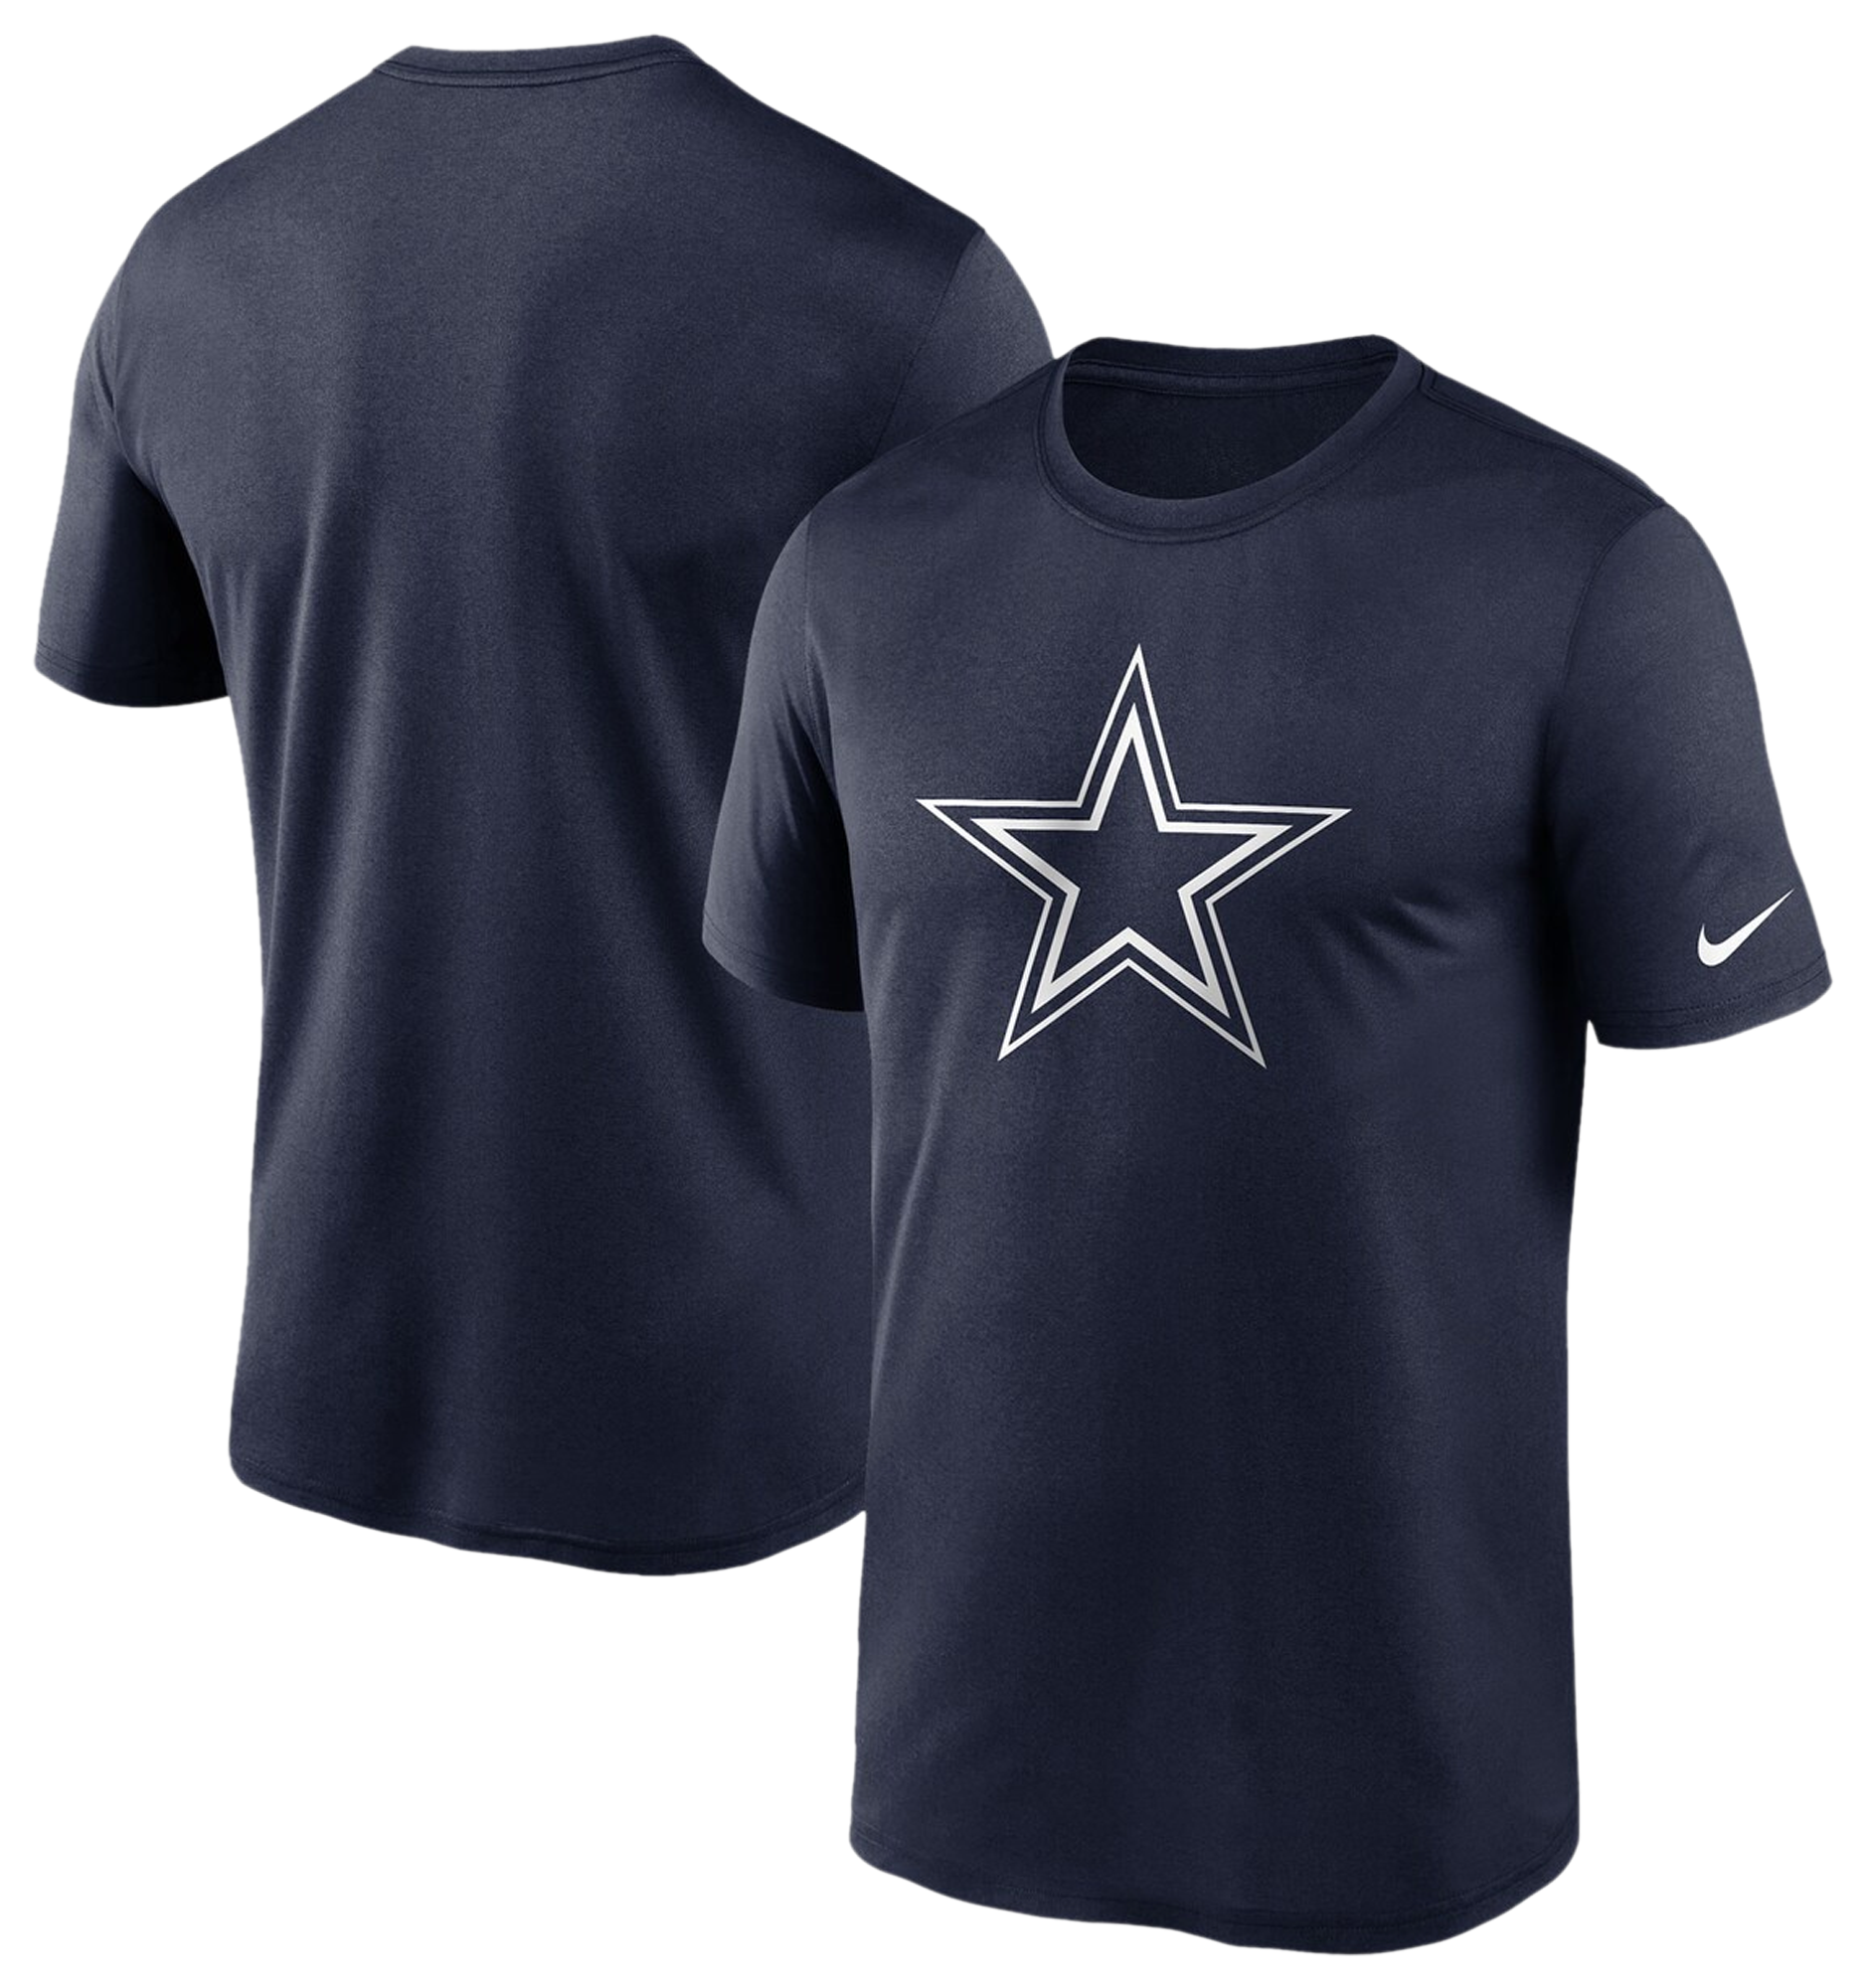 Nike Cowboys Essential Legend T-Shirt